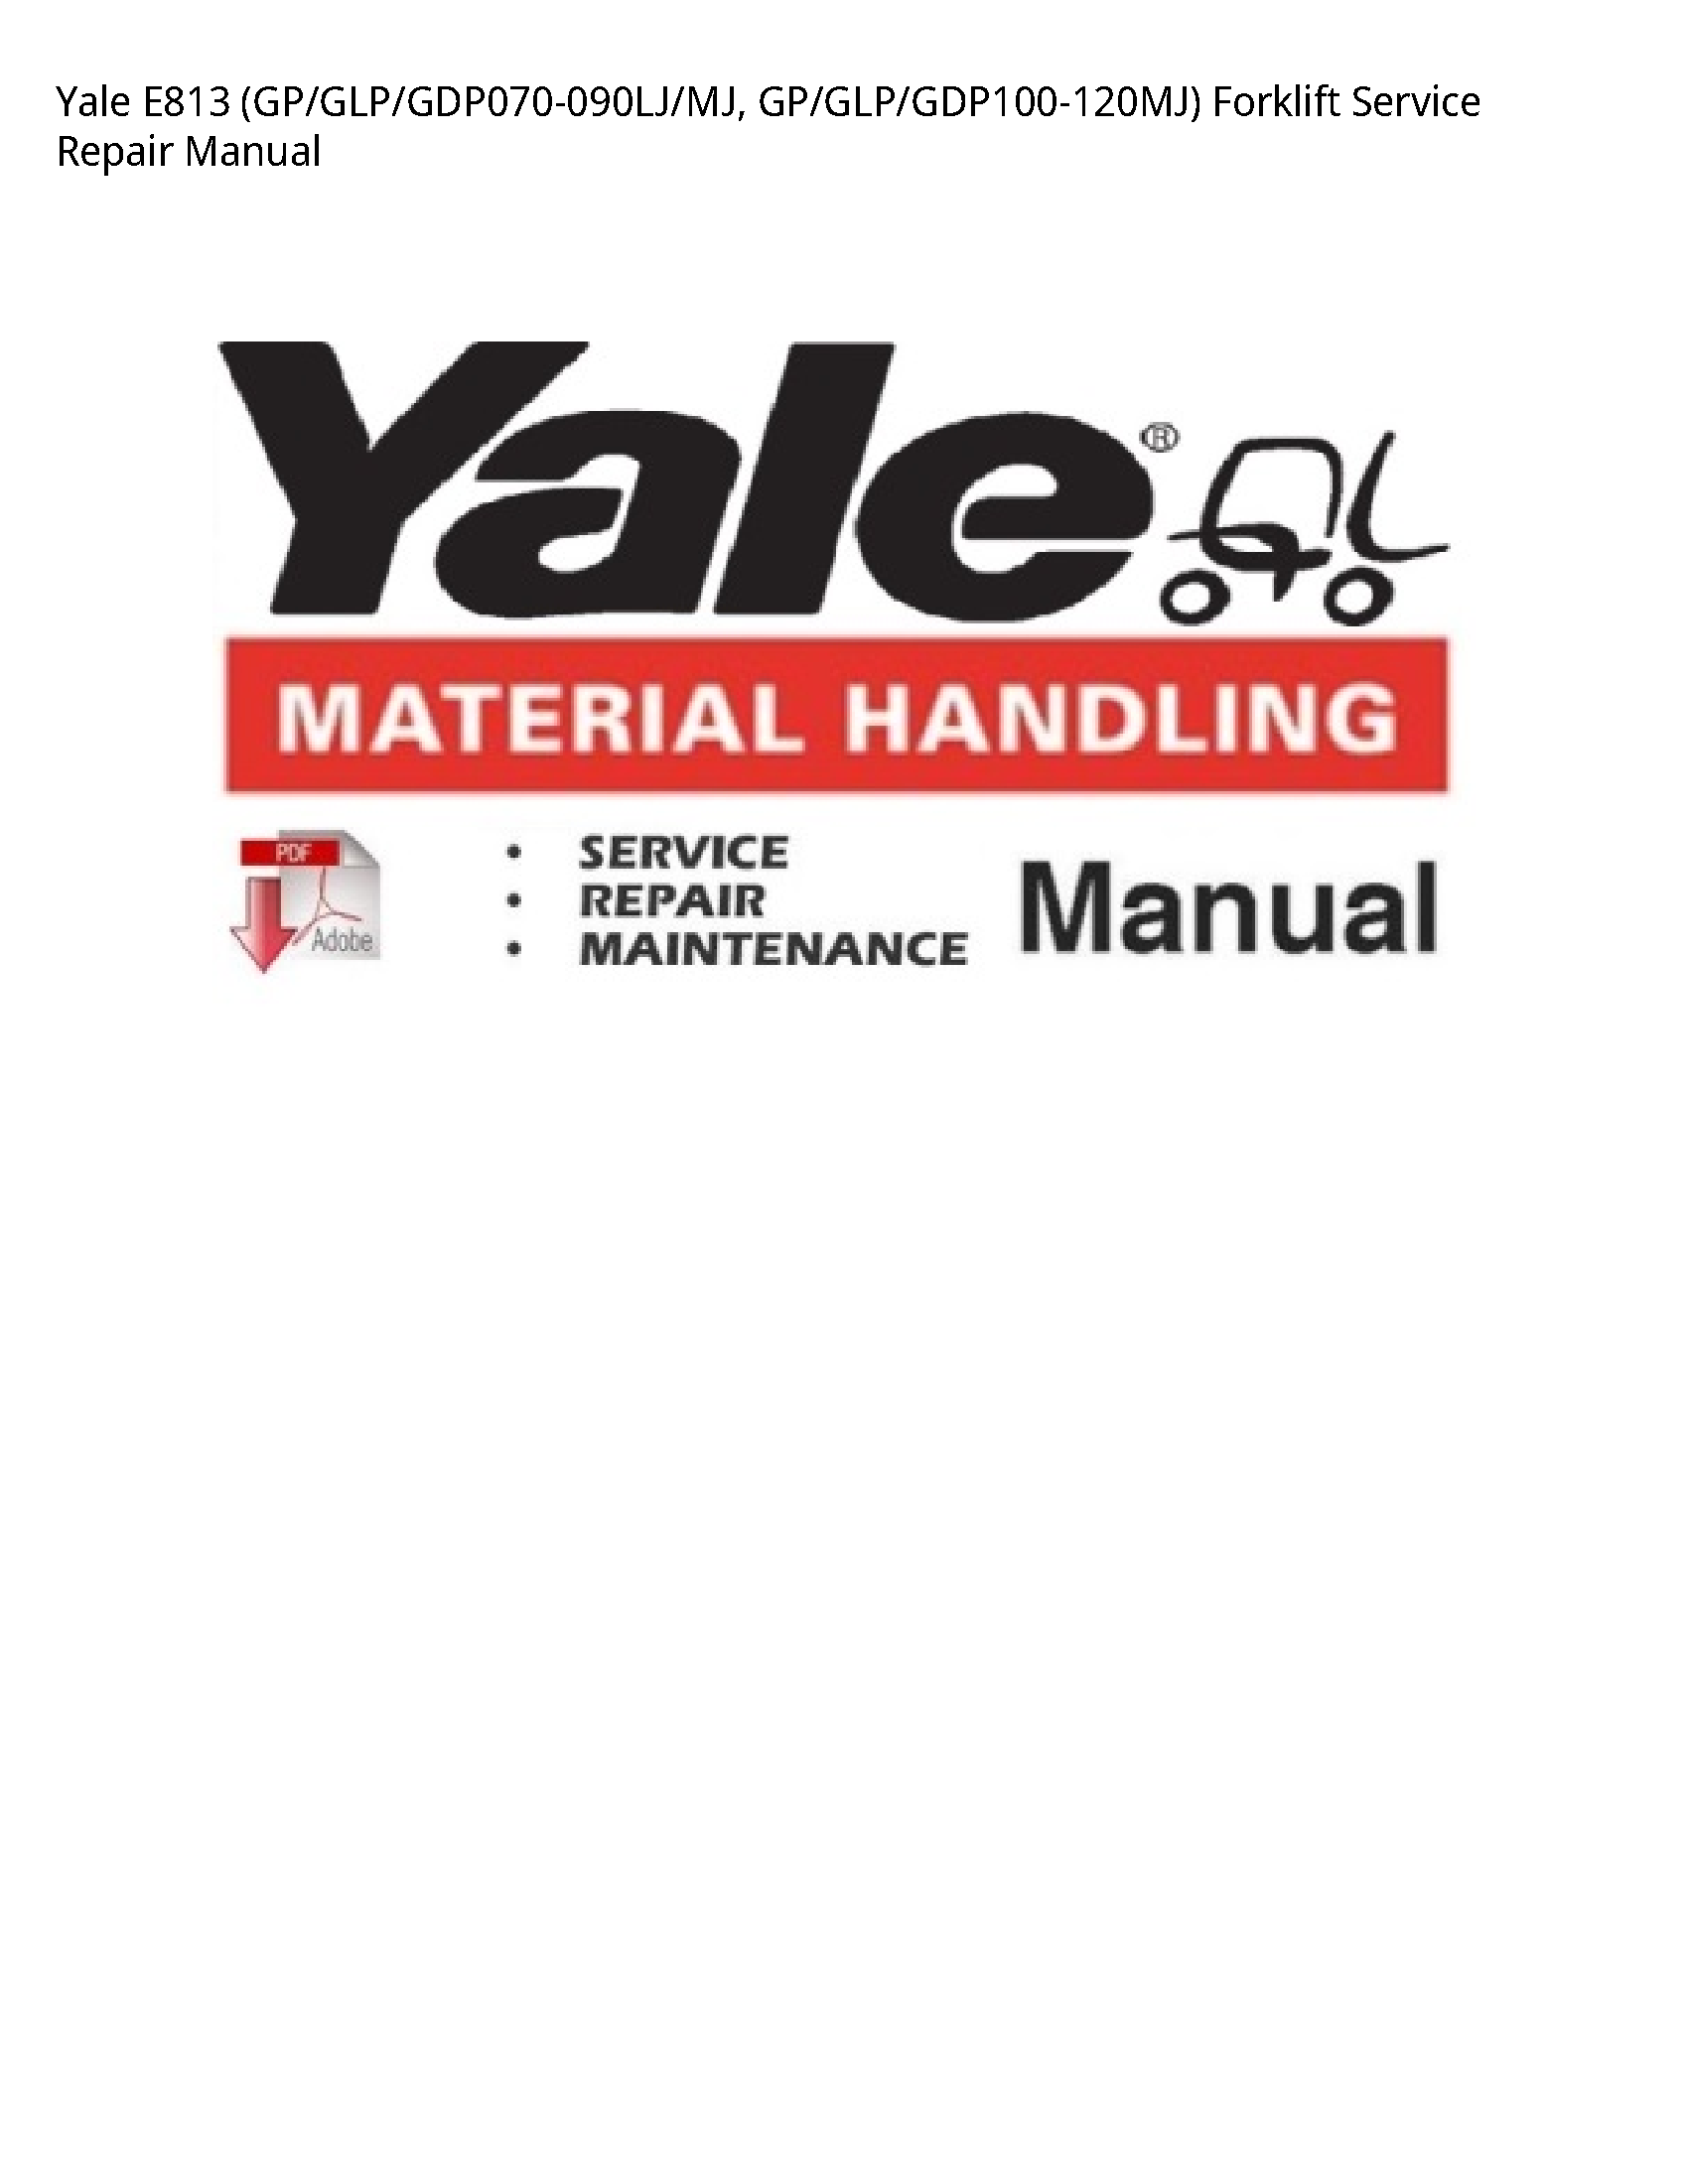 Yale E813 Forklift manual